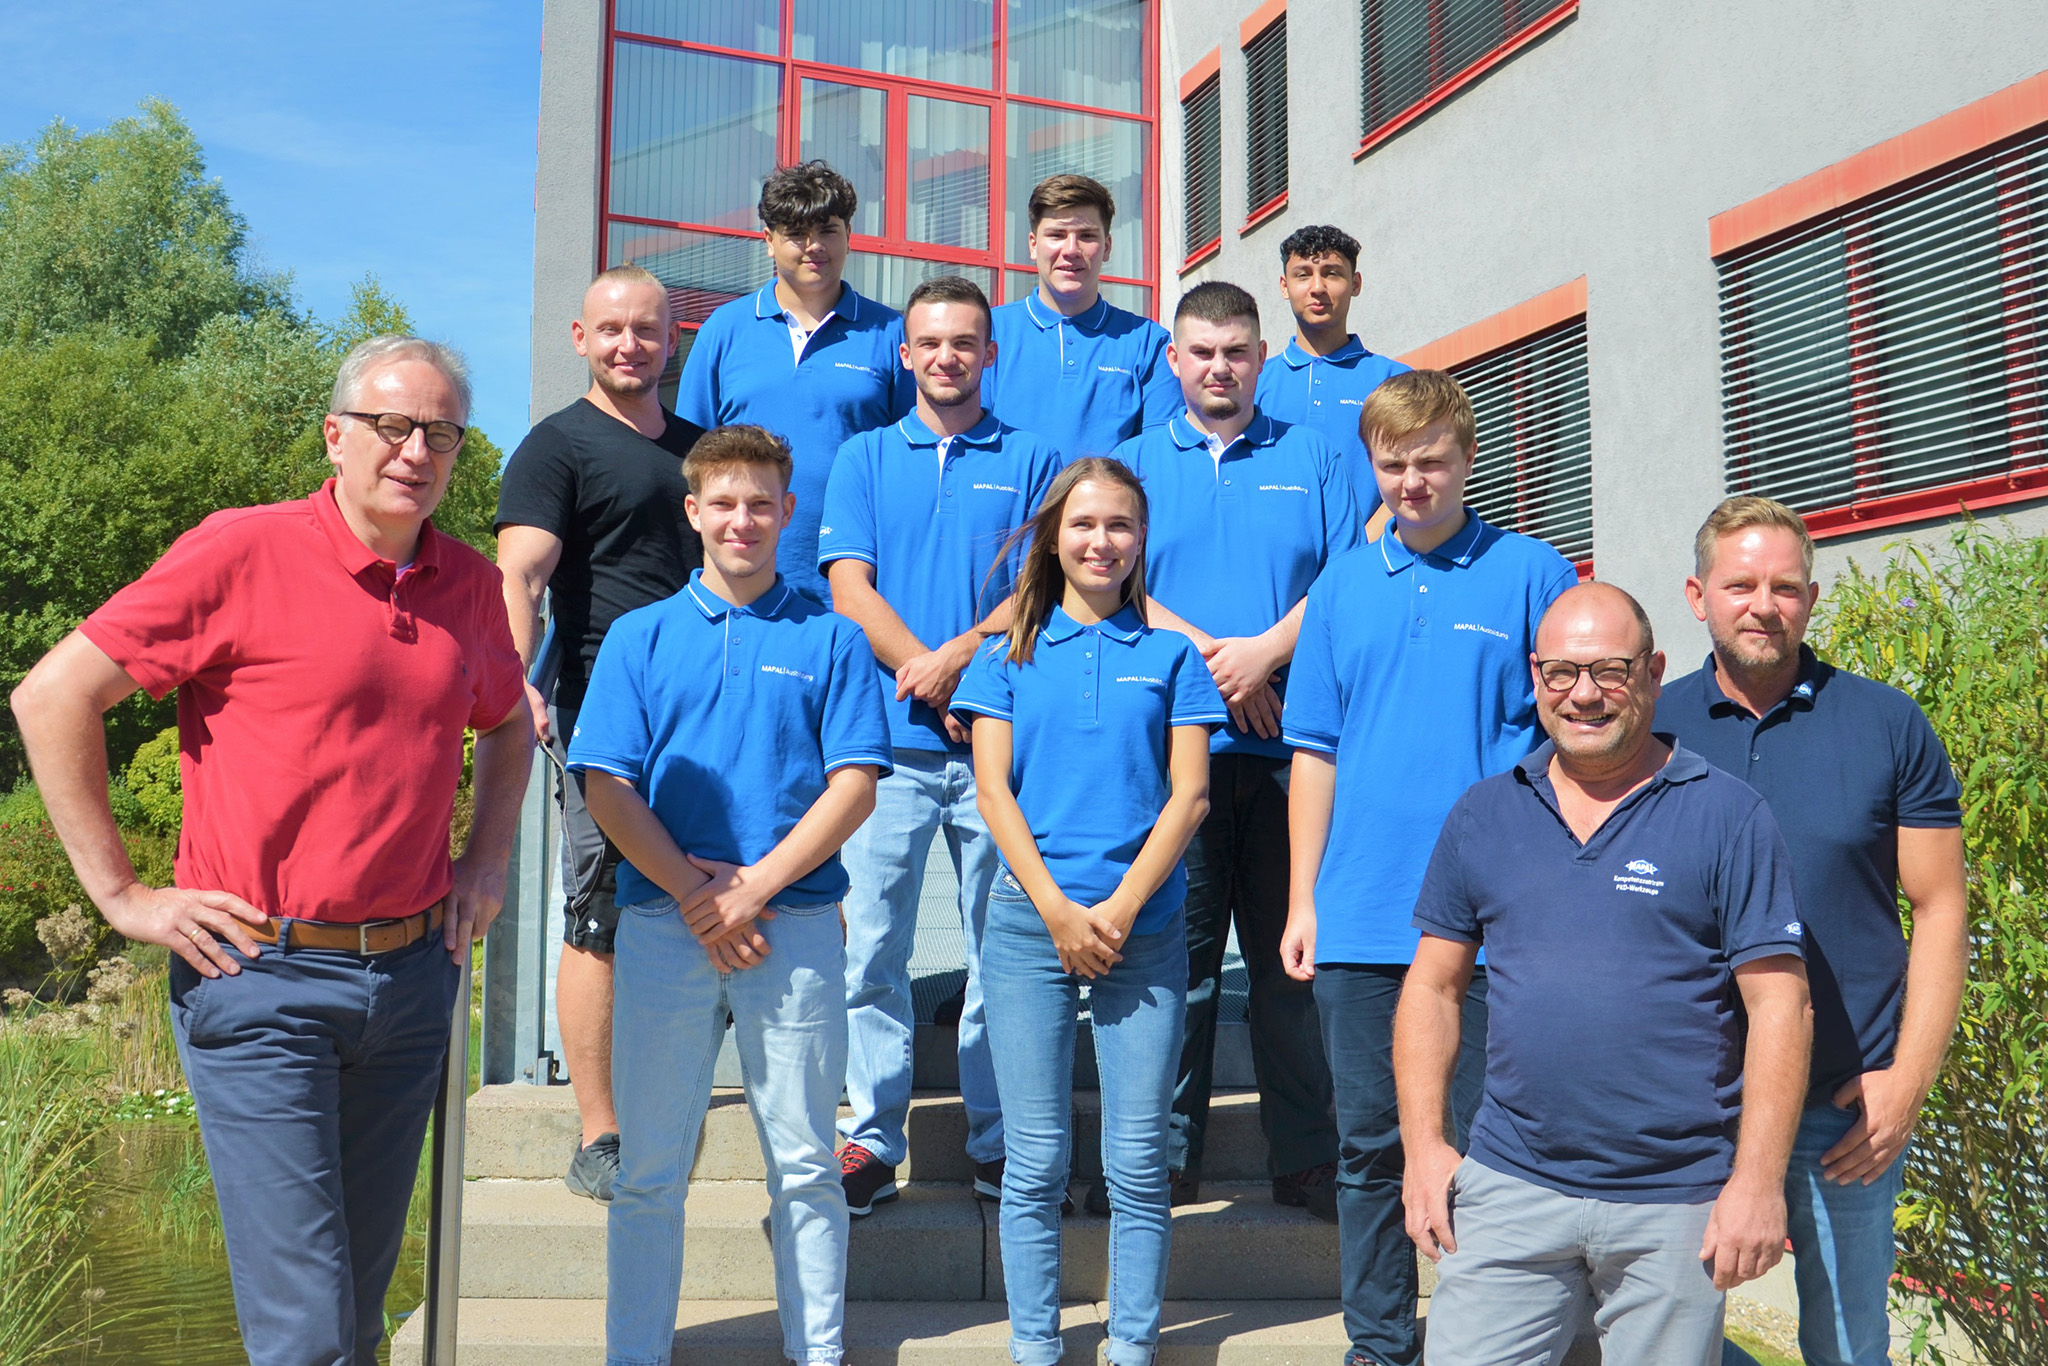 Eight trainees will start their apprenticeship at the site in Pforzheim. ©MAPAL